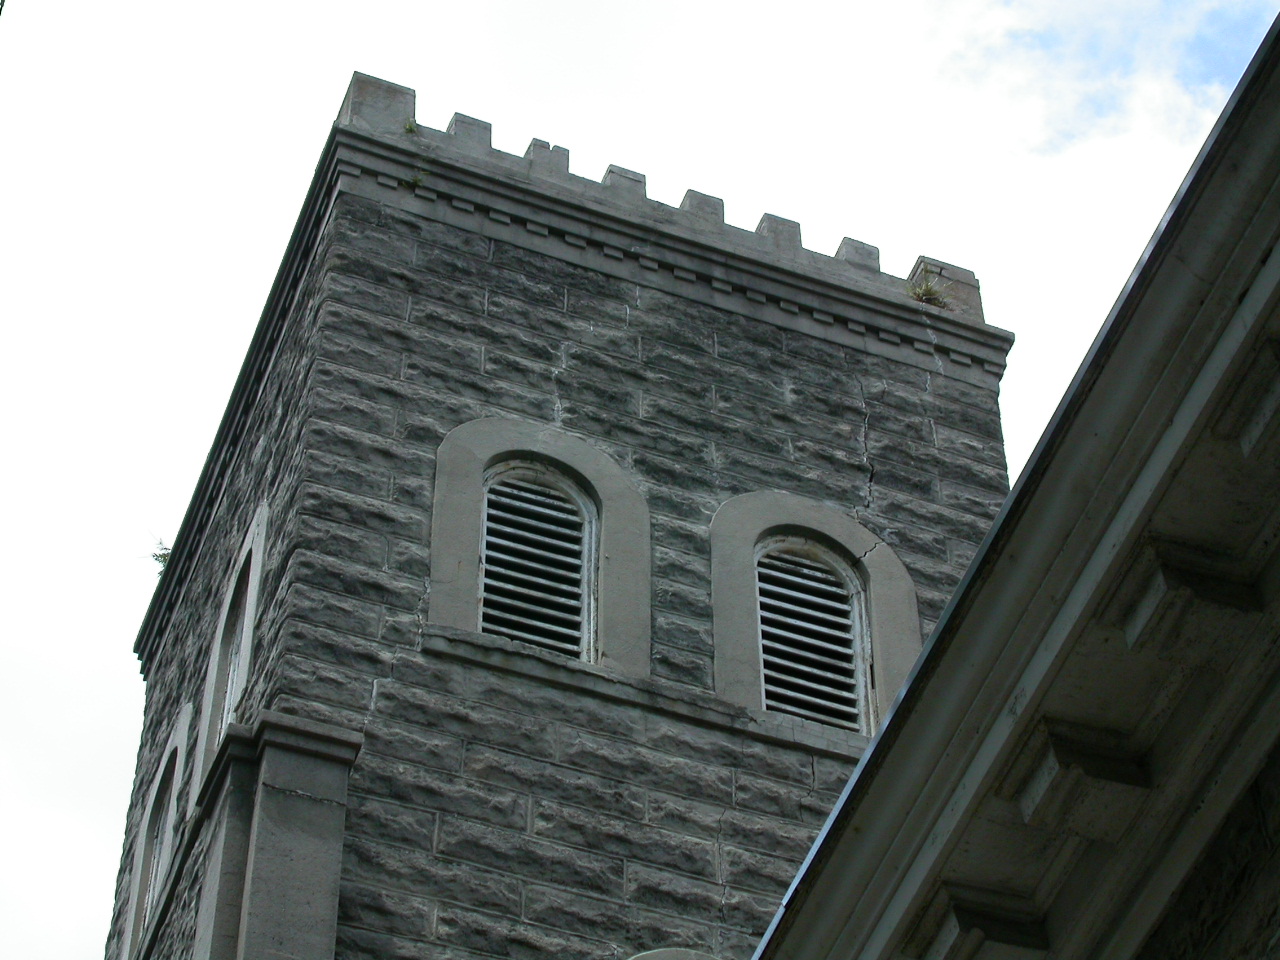 Tower with barricaded windows photo